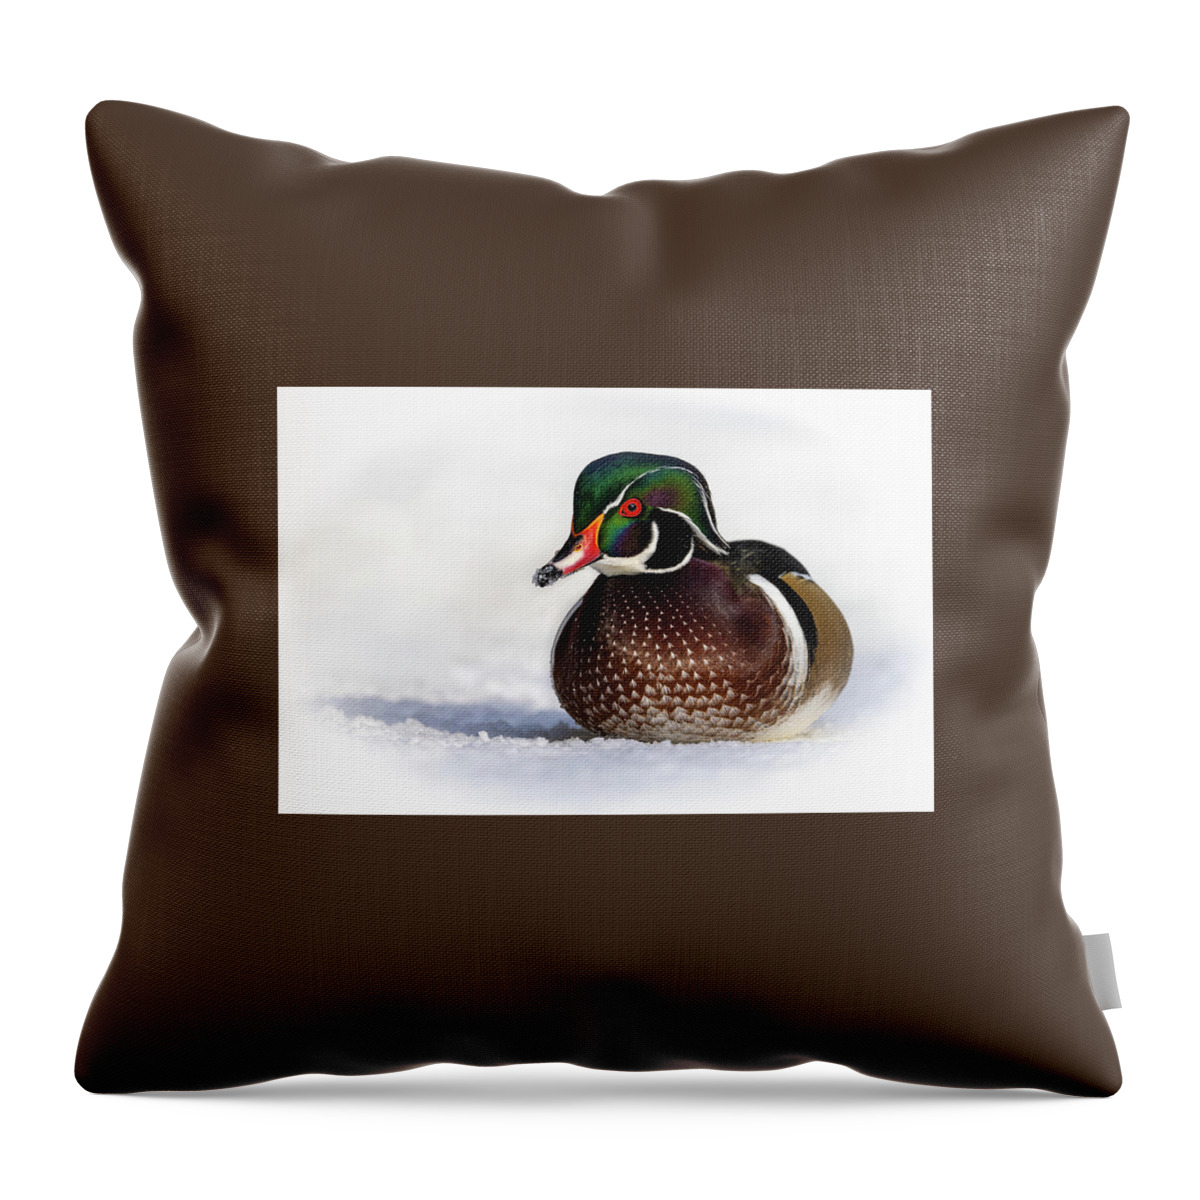 Duck Throw Pillow featuring the photograph Wood Duck in Snow by Bill Cubitt